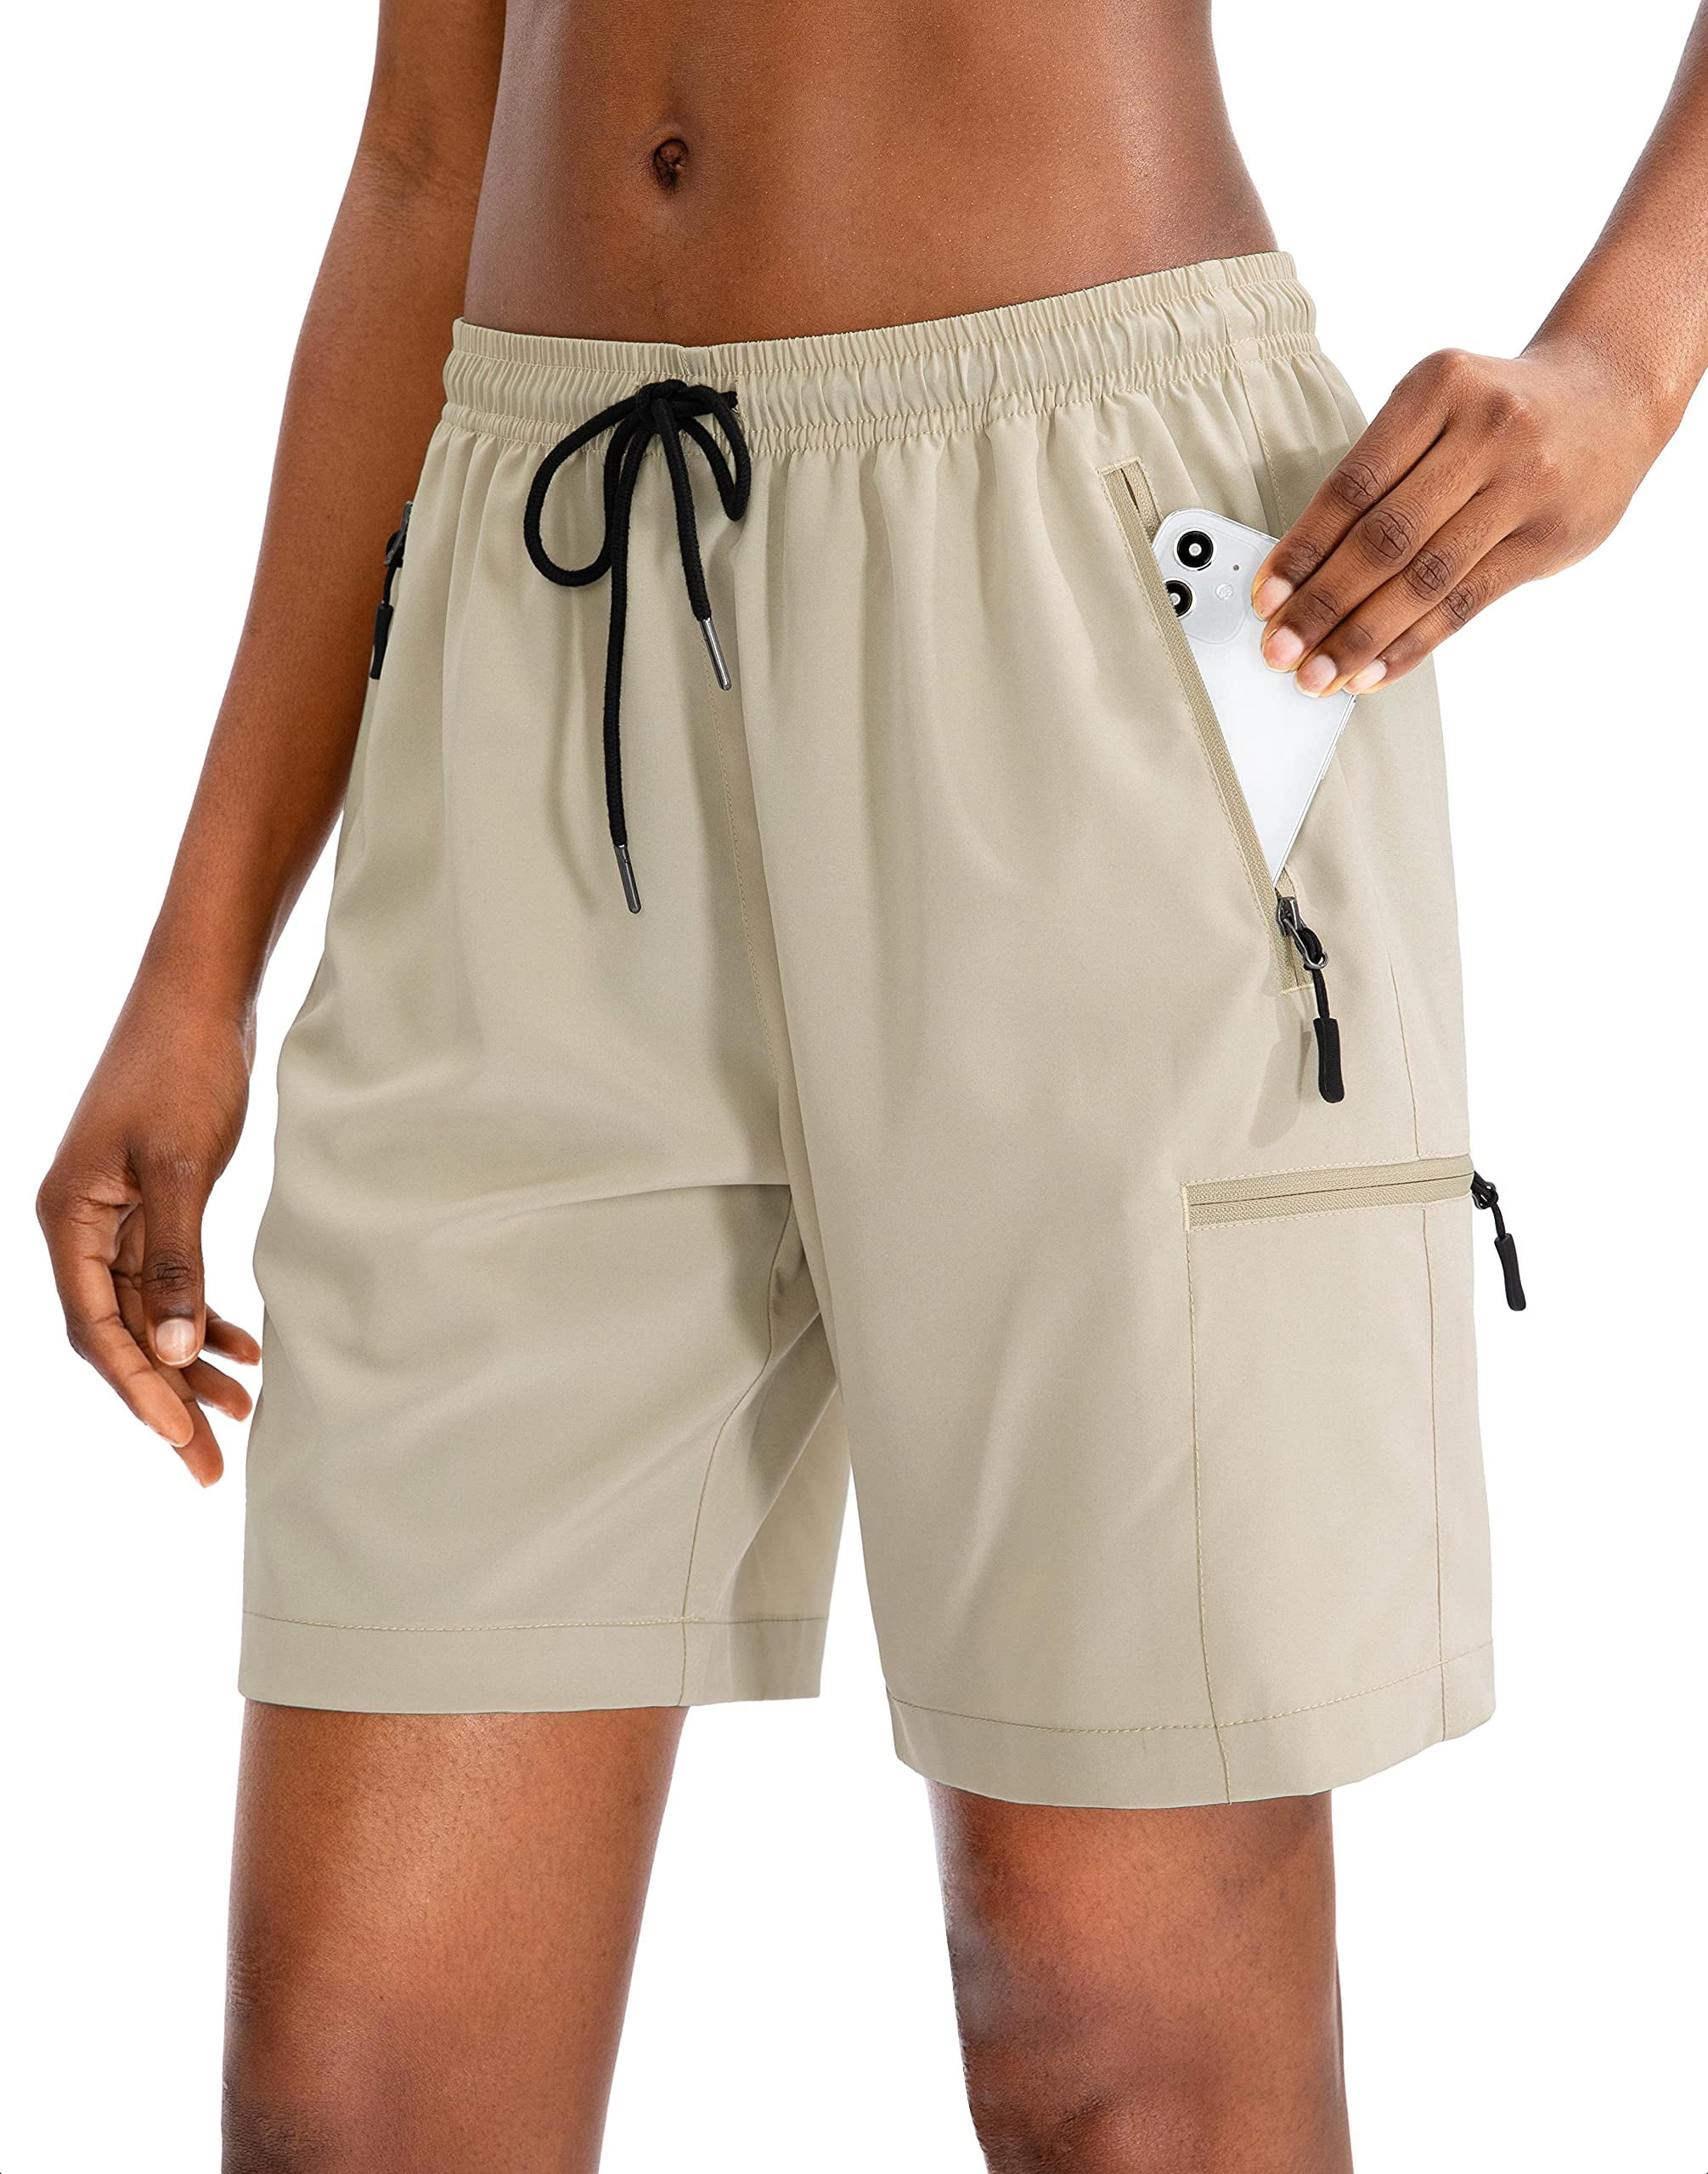 linlon Womens Quick Dry Cargo Shorts,Outdoor Casual Capri Long Shorts for Hiking Camping Travel 